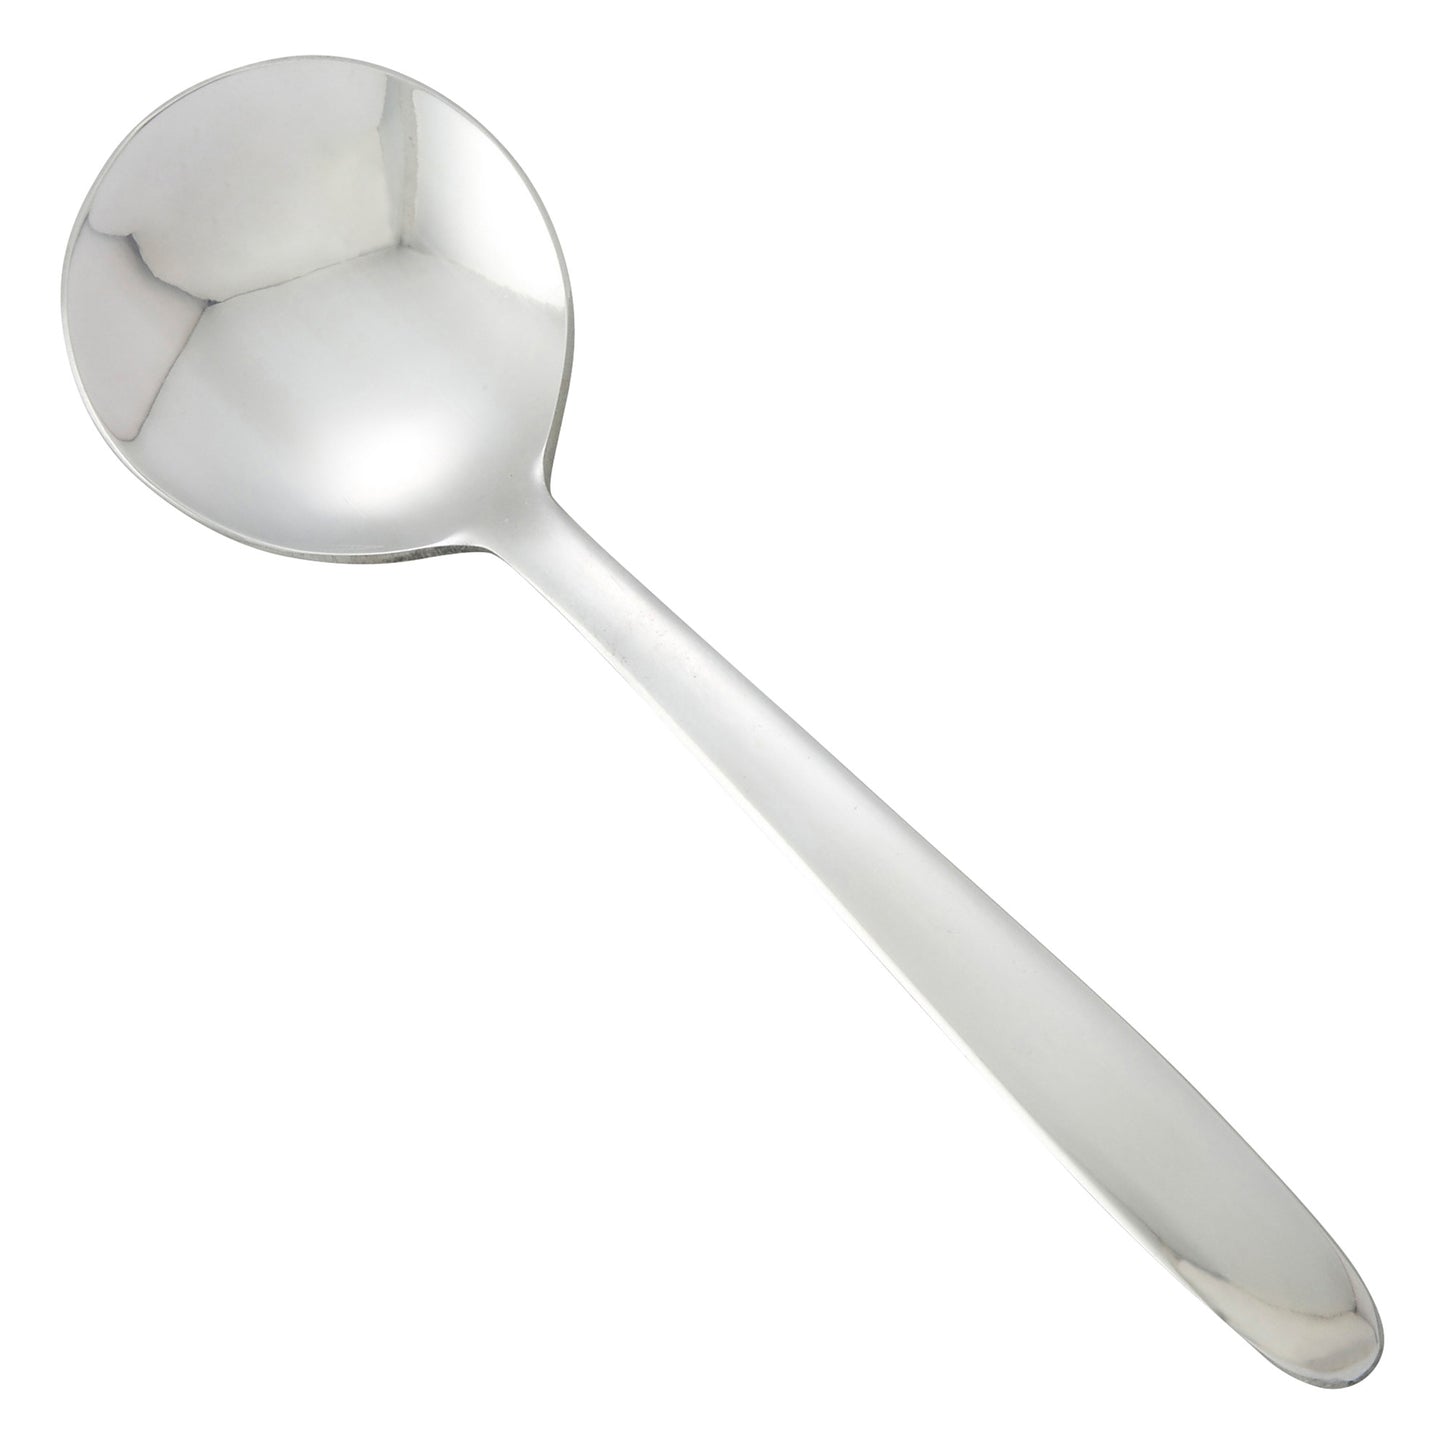 0019-04 - Flute Bouillon Spoon, 18/0 Heavyweight